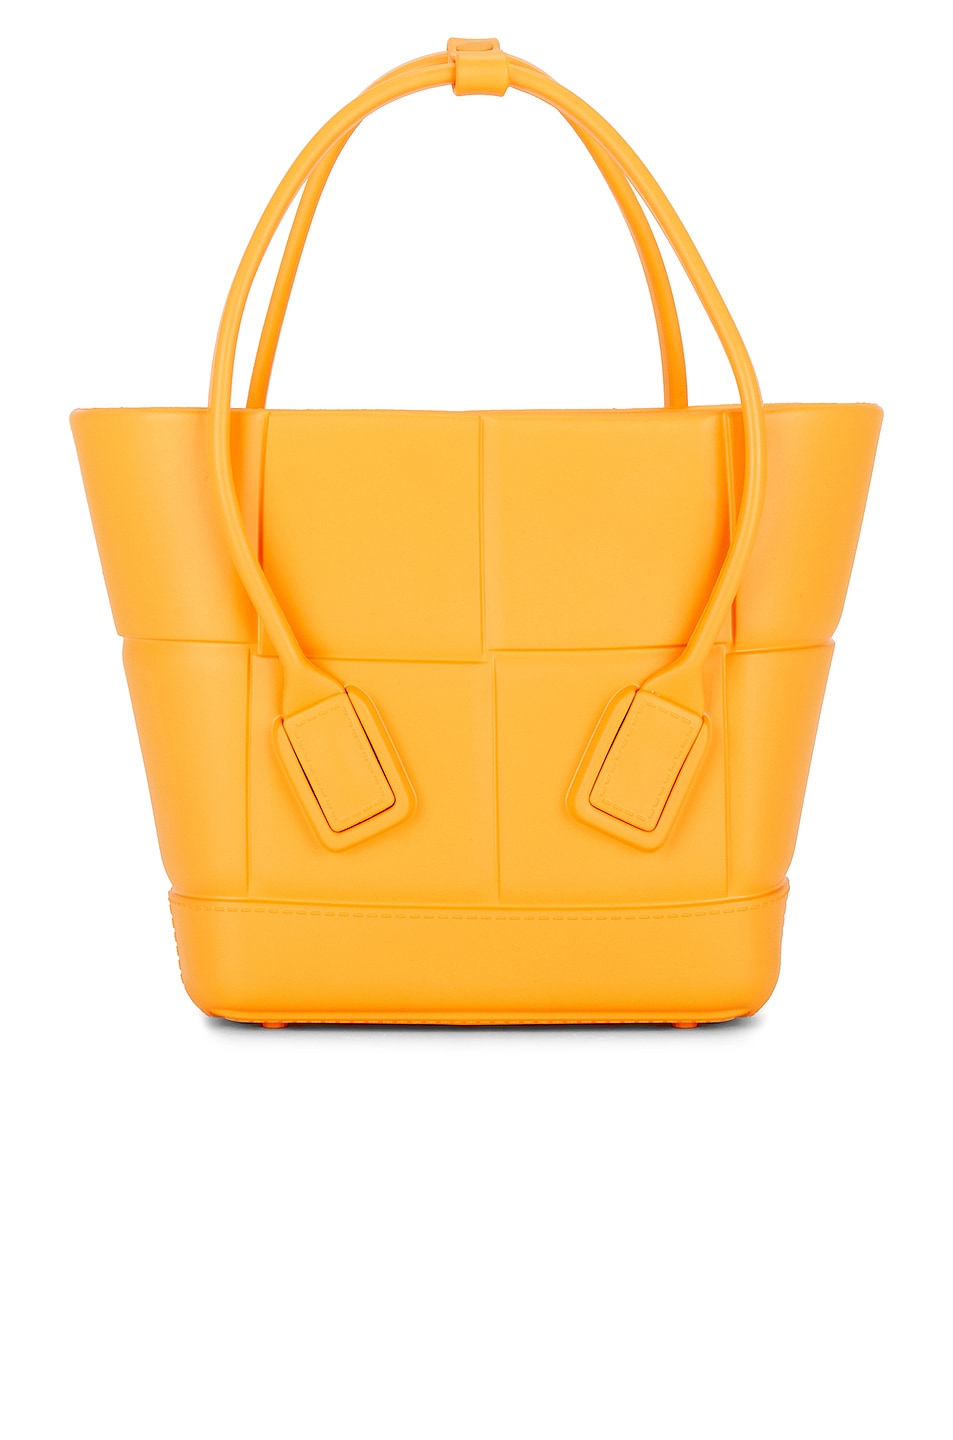 Mini Arco Shopping Tote Bag in Orange